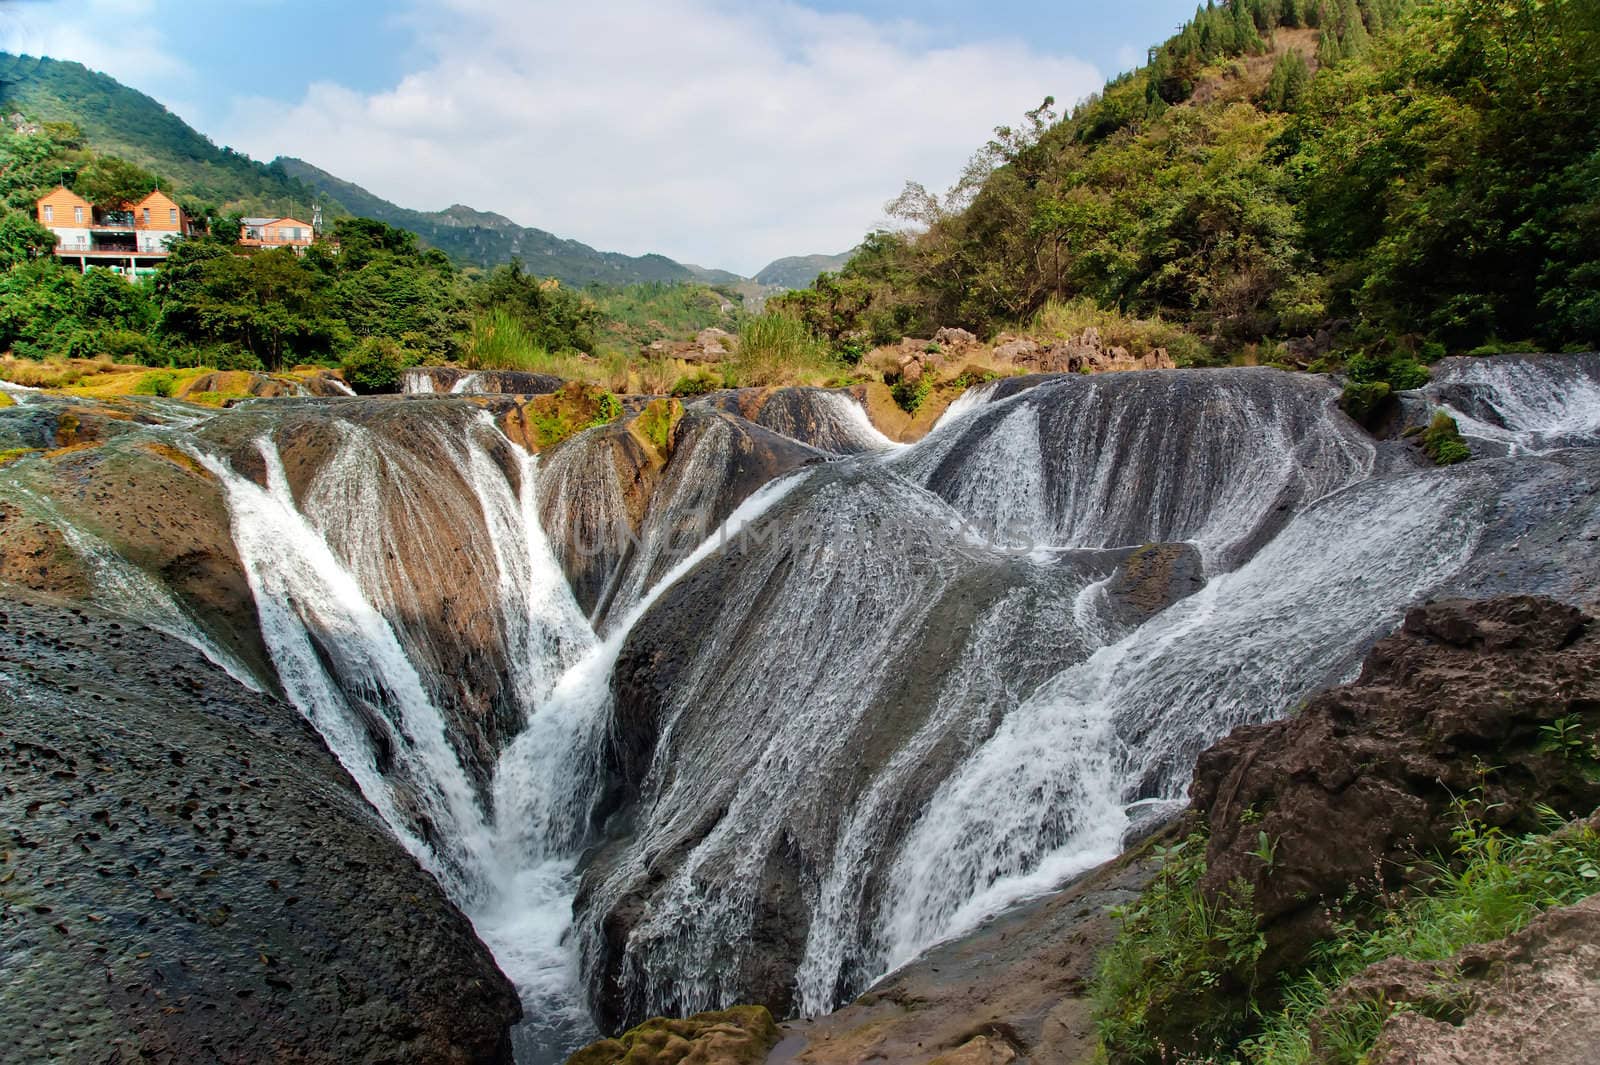 Silver pendant Lake Falls - was taken in China's Guizhou Huangguoshu